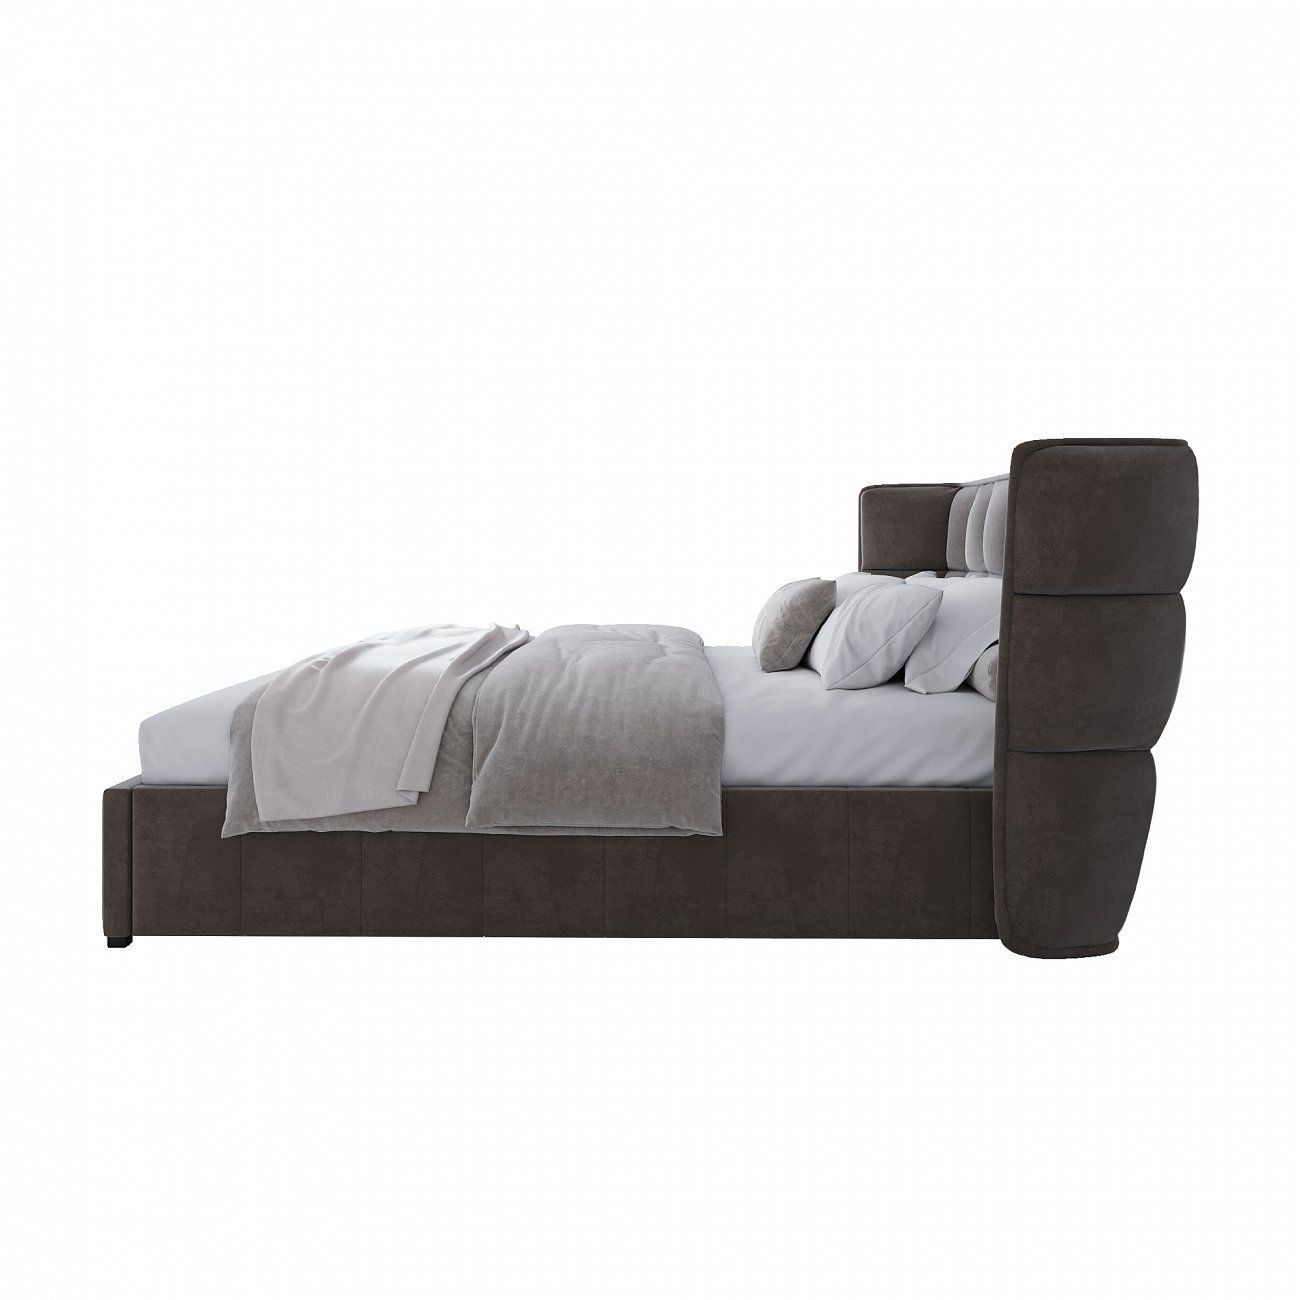 Double bed 200x200 cm grey Husk